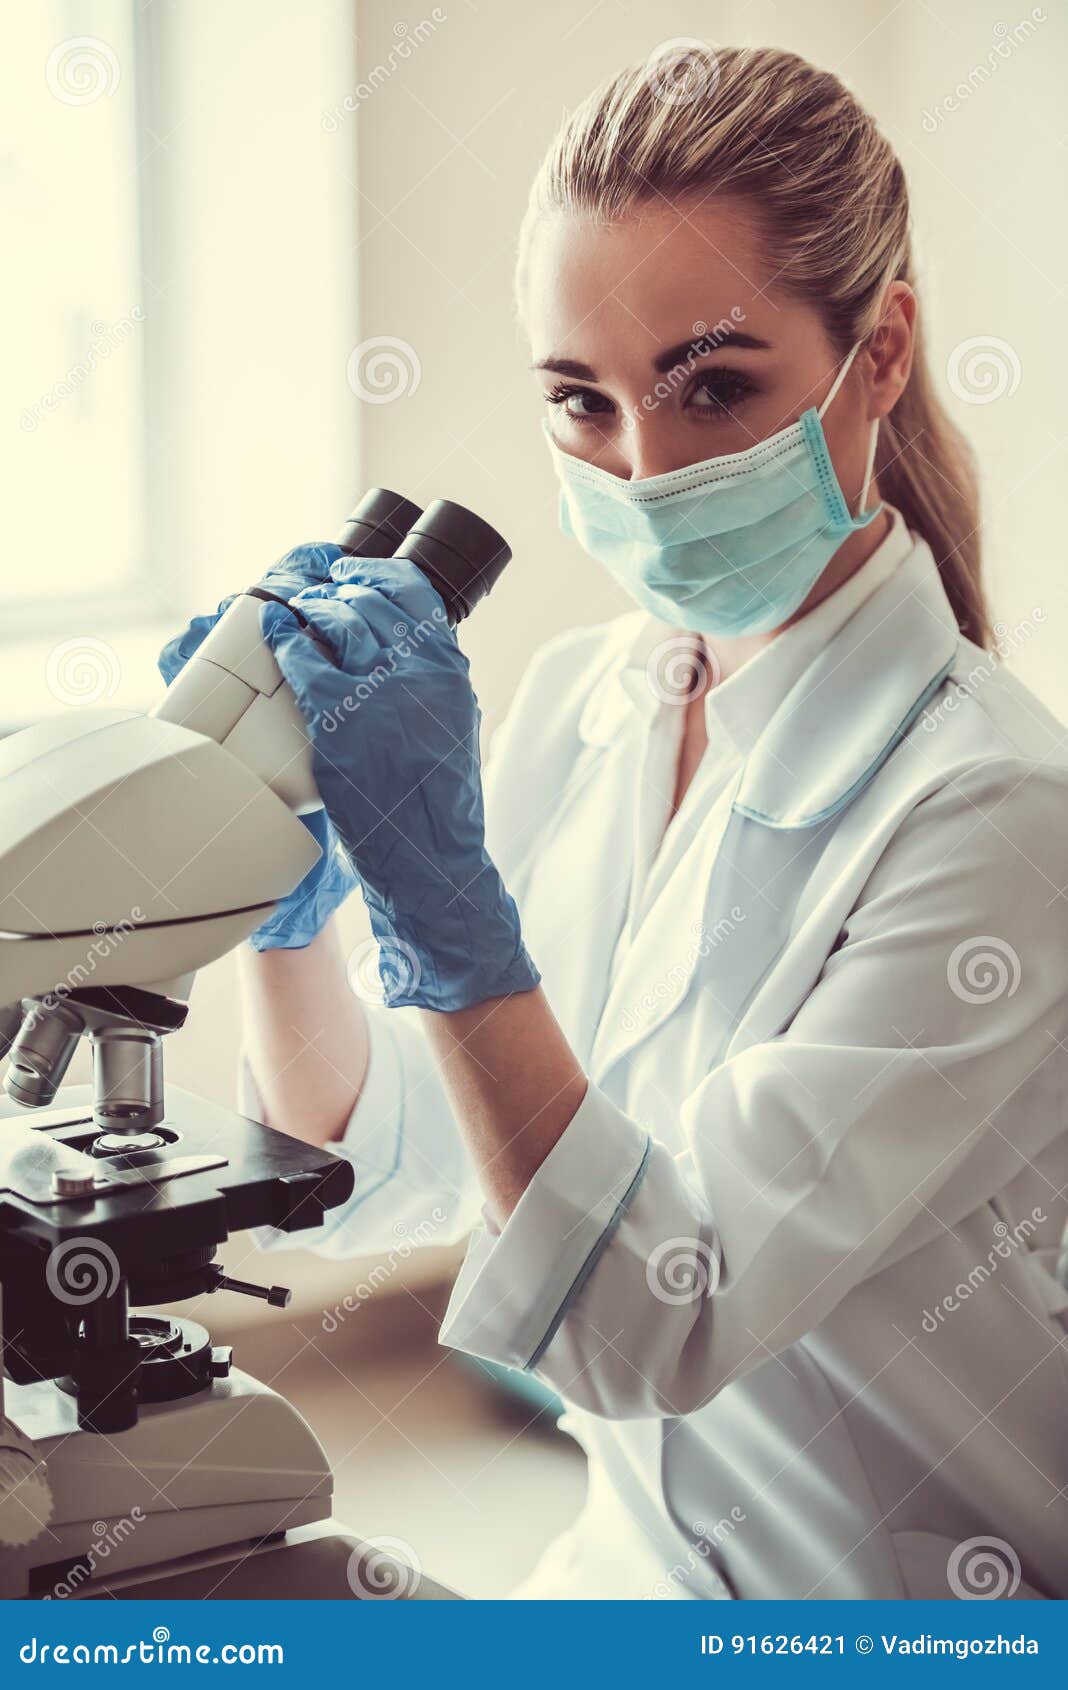 Beautiful Female Doctor in Laboratory Stock Image - Image of girl ...